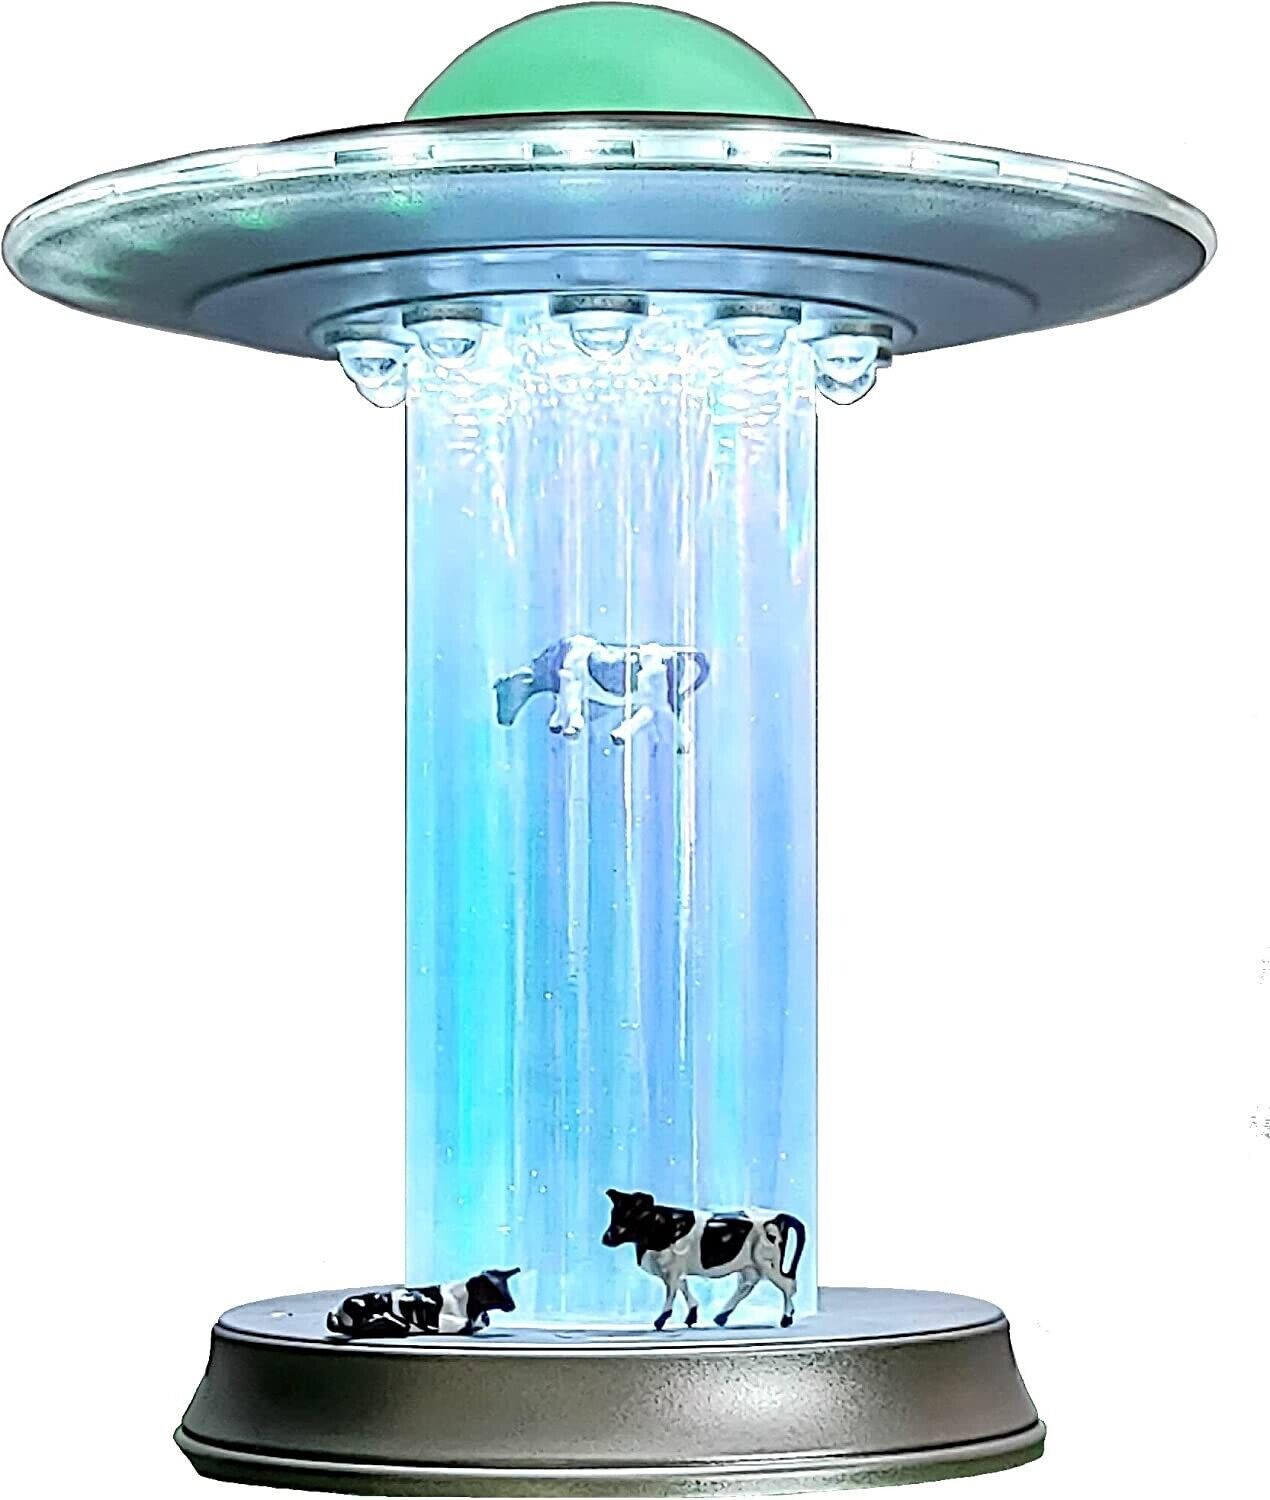 UFO Model Cow Abduction Alien Decoration Area 51 UFO Lamp Spacecraft Space Lover